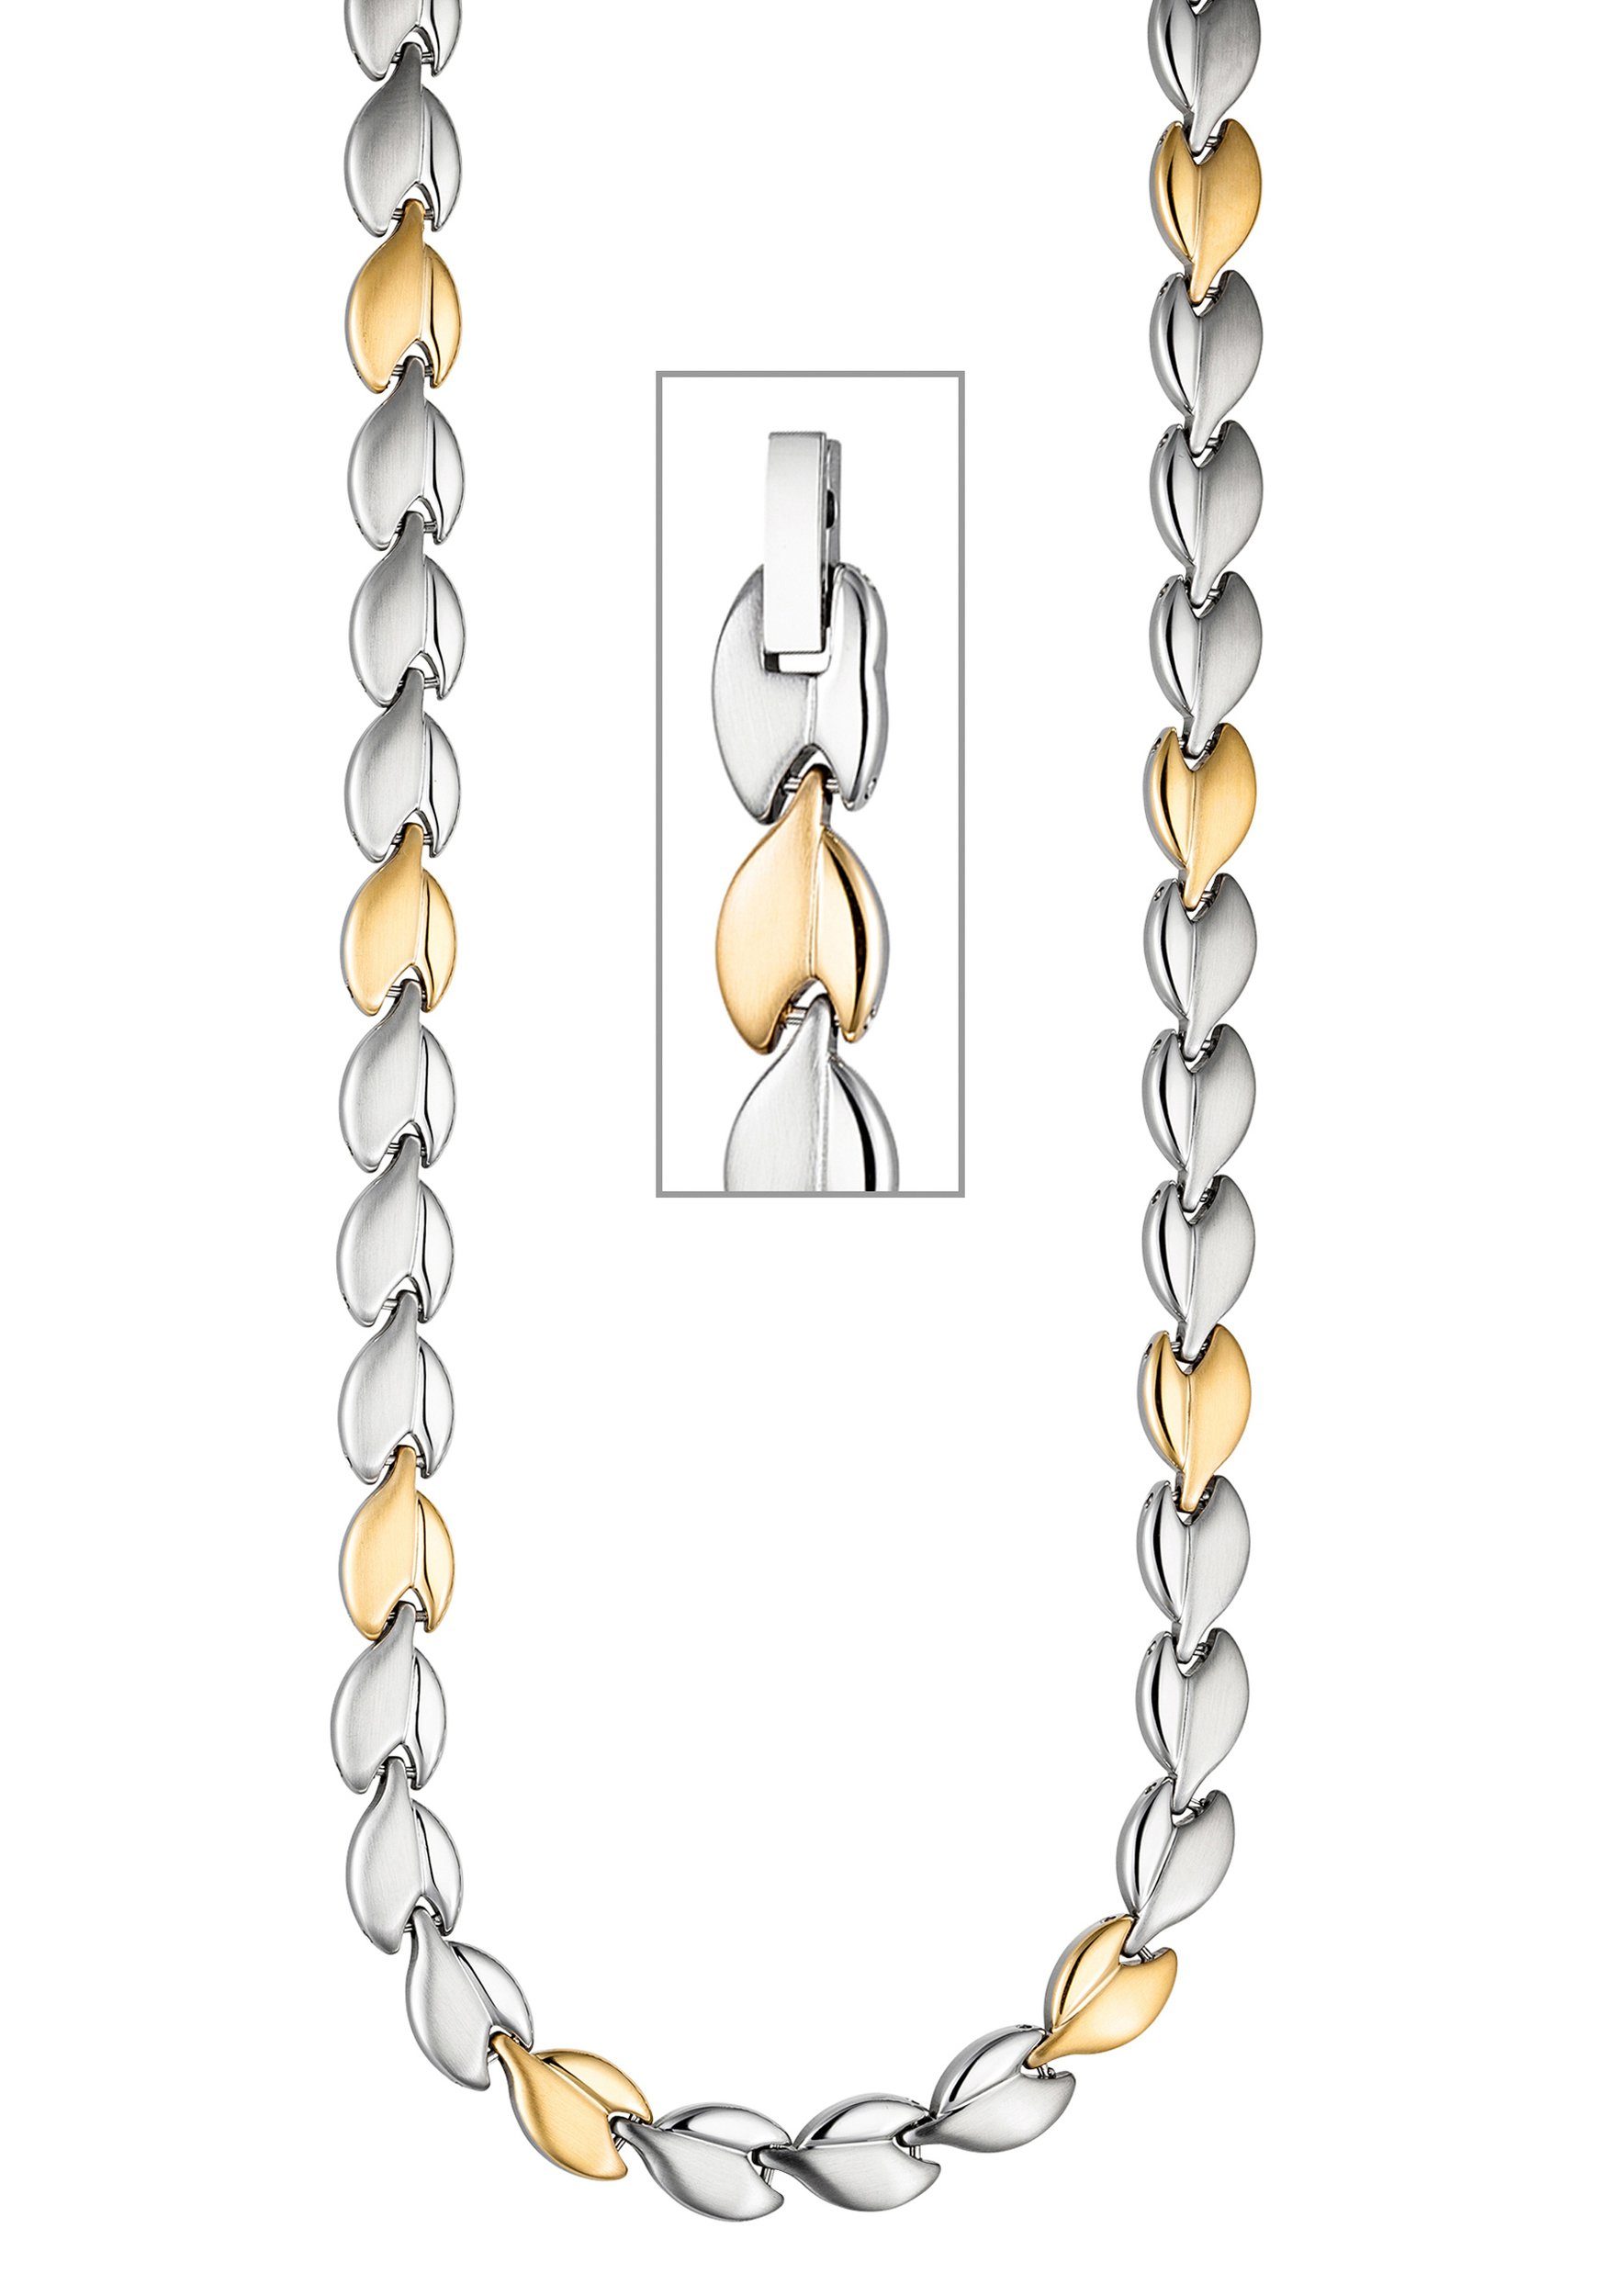 JOBO Kette ohne Anhänger »Halskette in Bicolor-Optik«, Edelstahl goldfarben  45 cm online kaufen | OTTO